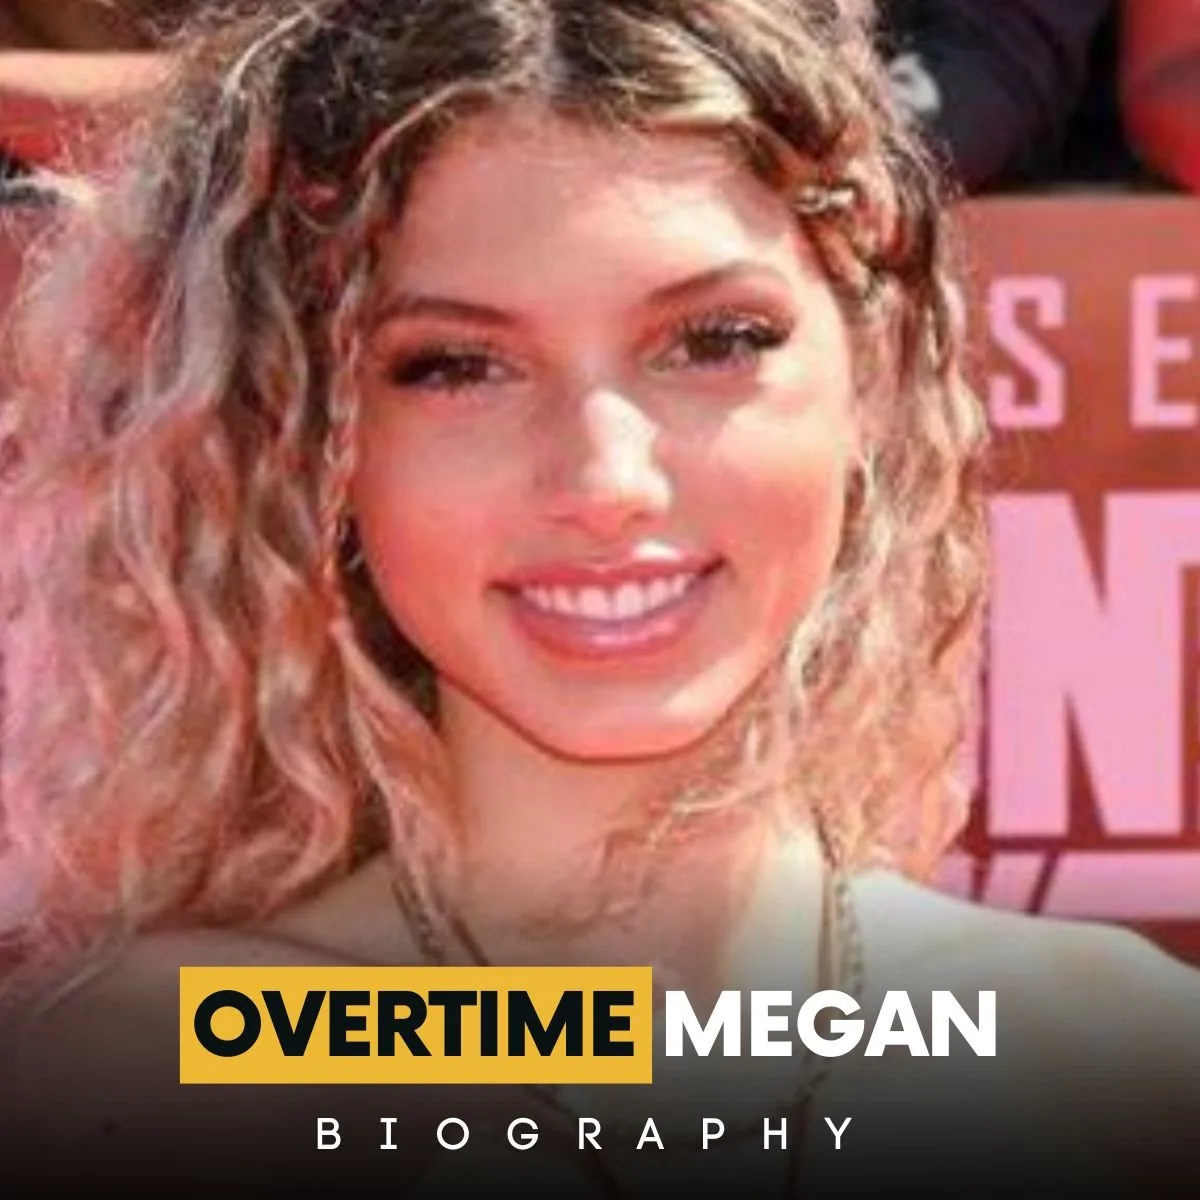 Overtime Megan Biography